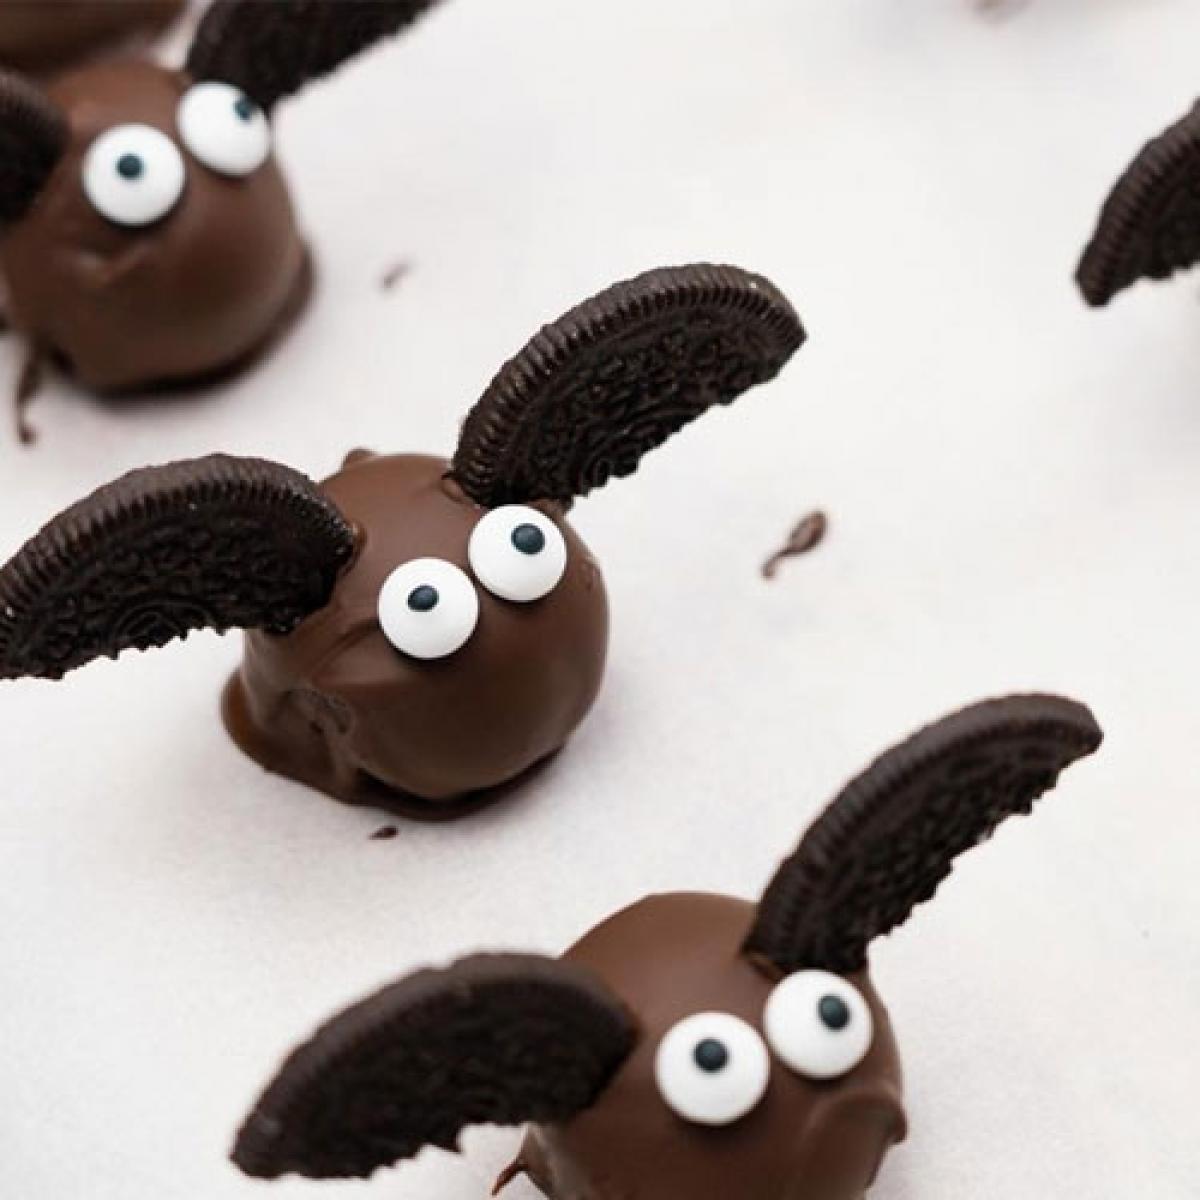 Spooky chocolade-vleermuistruffels